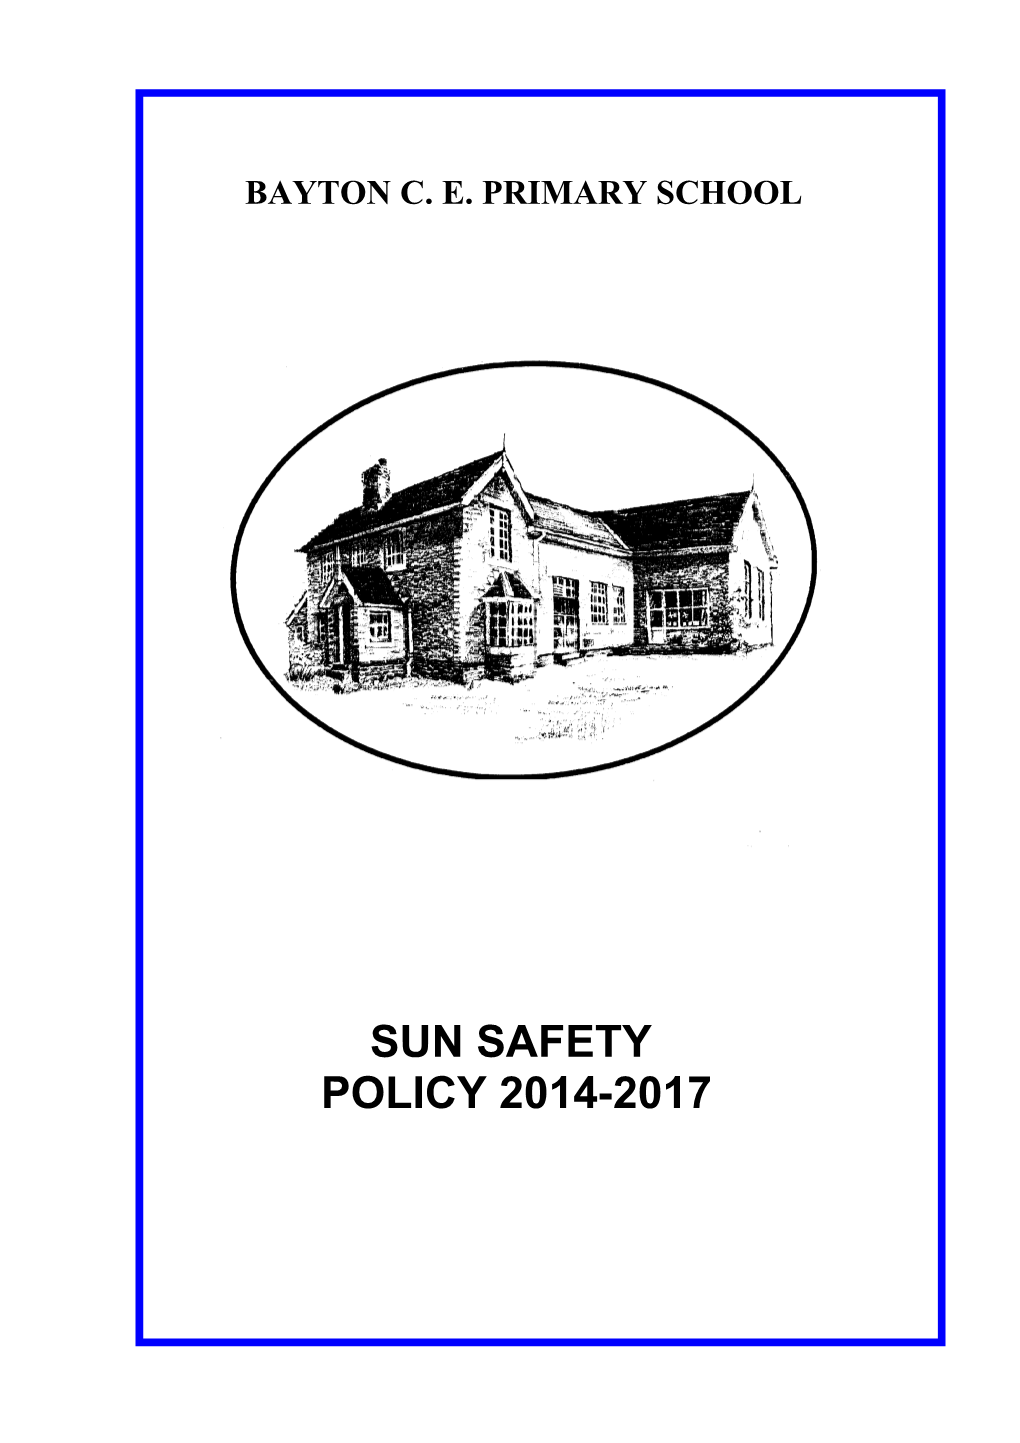 Bayton C. E. Primary School Sun Safety